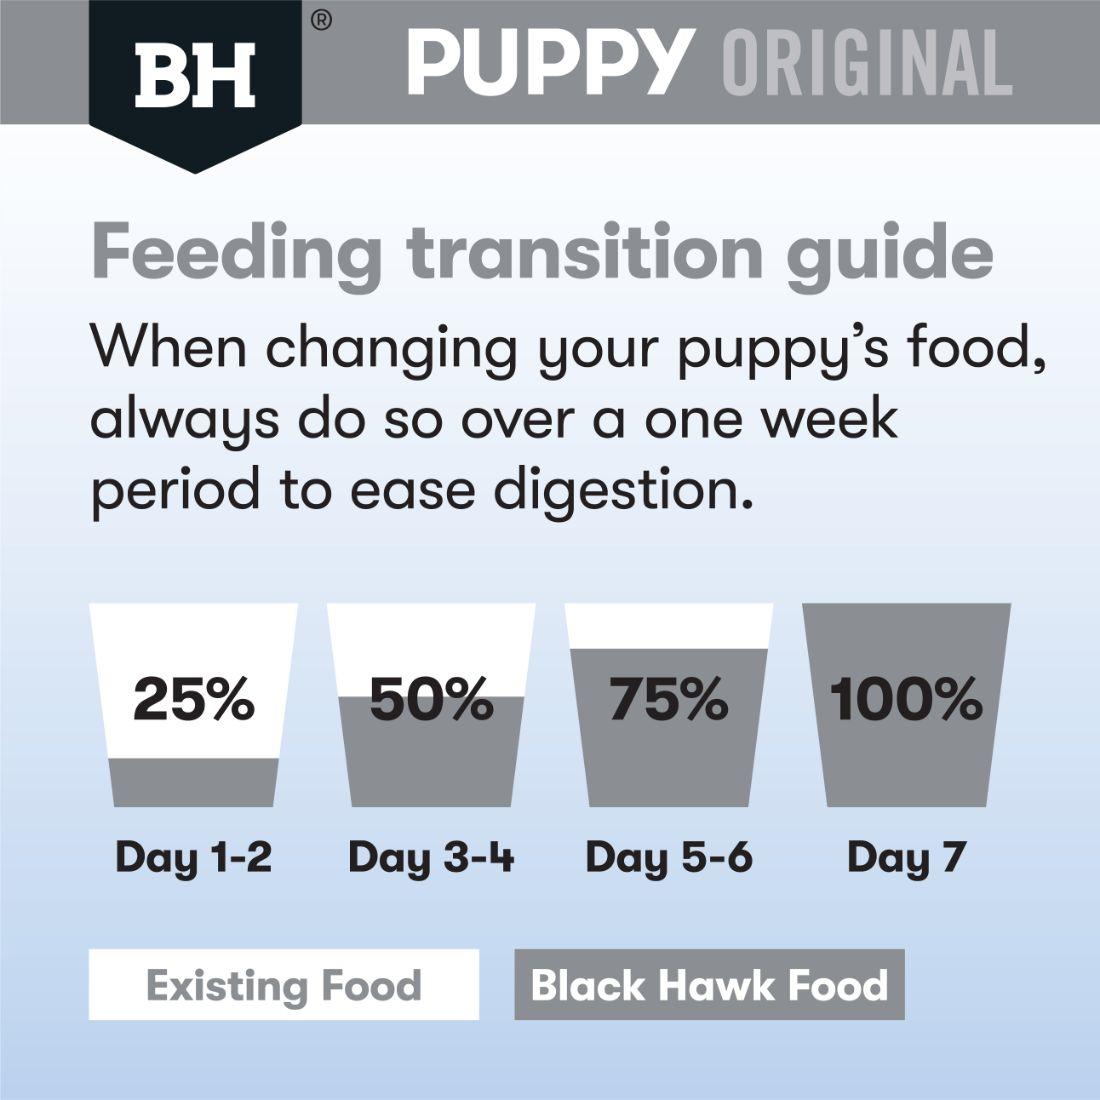 Black Hawk Puppy Large Breed Chicken & Rice Dry Dog food